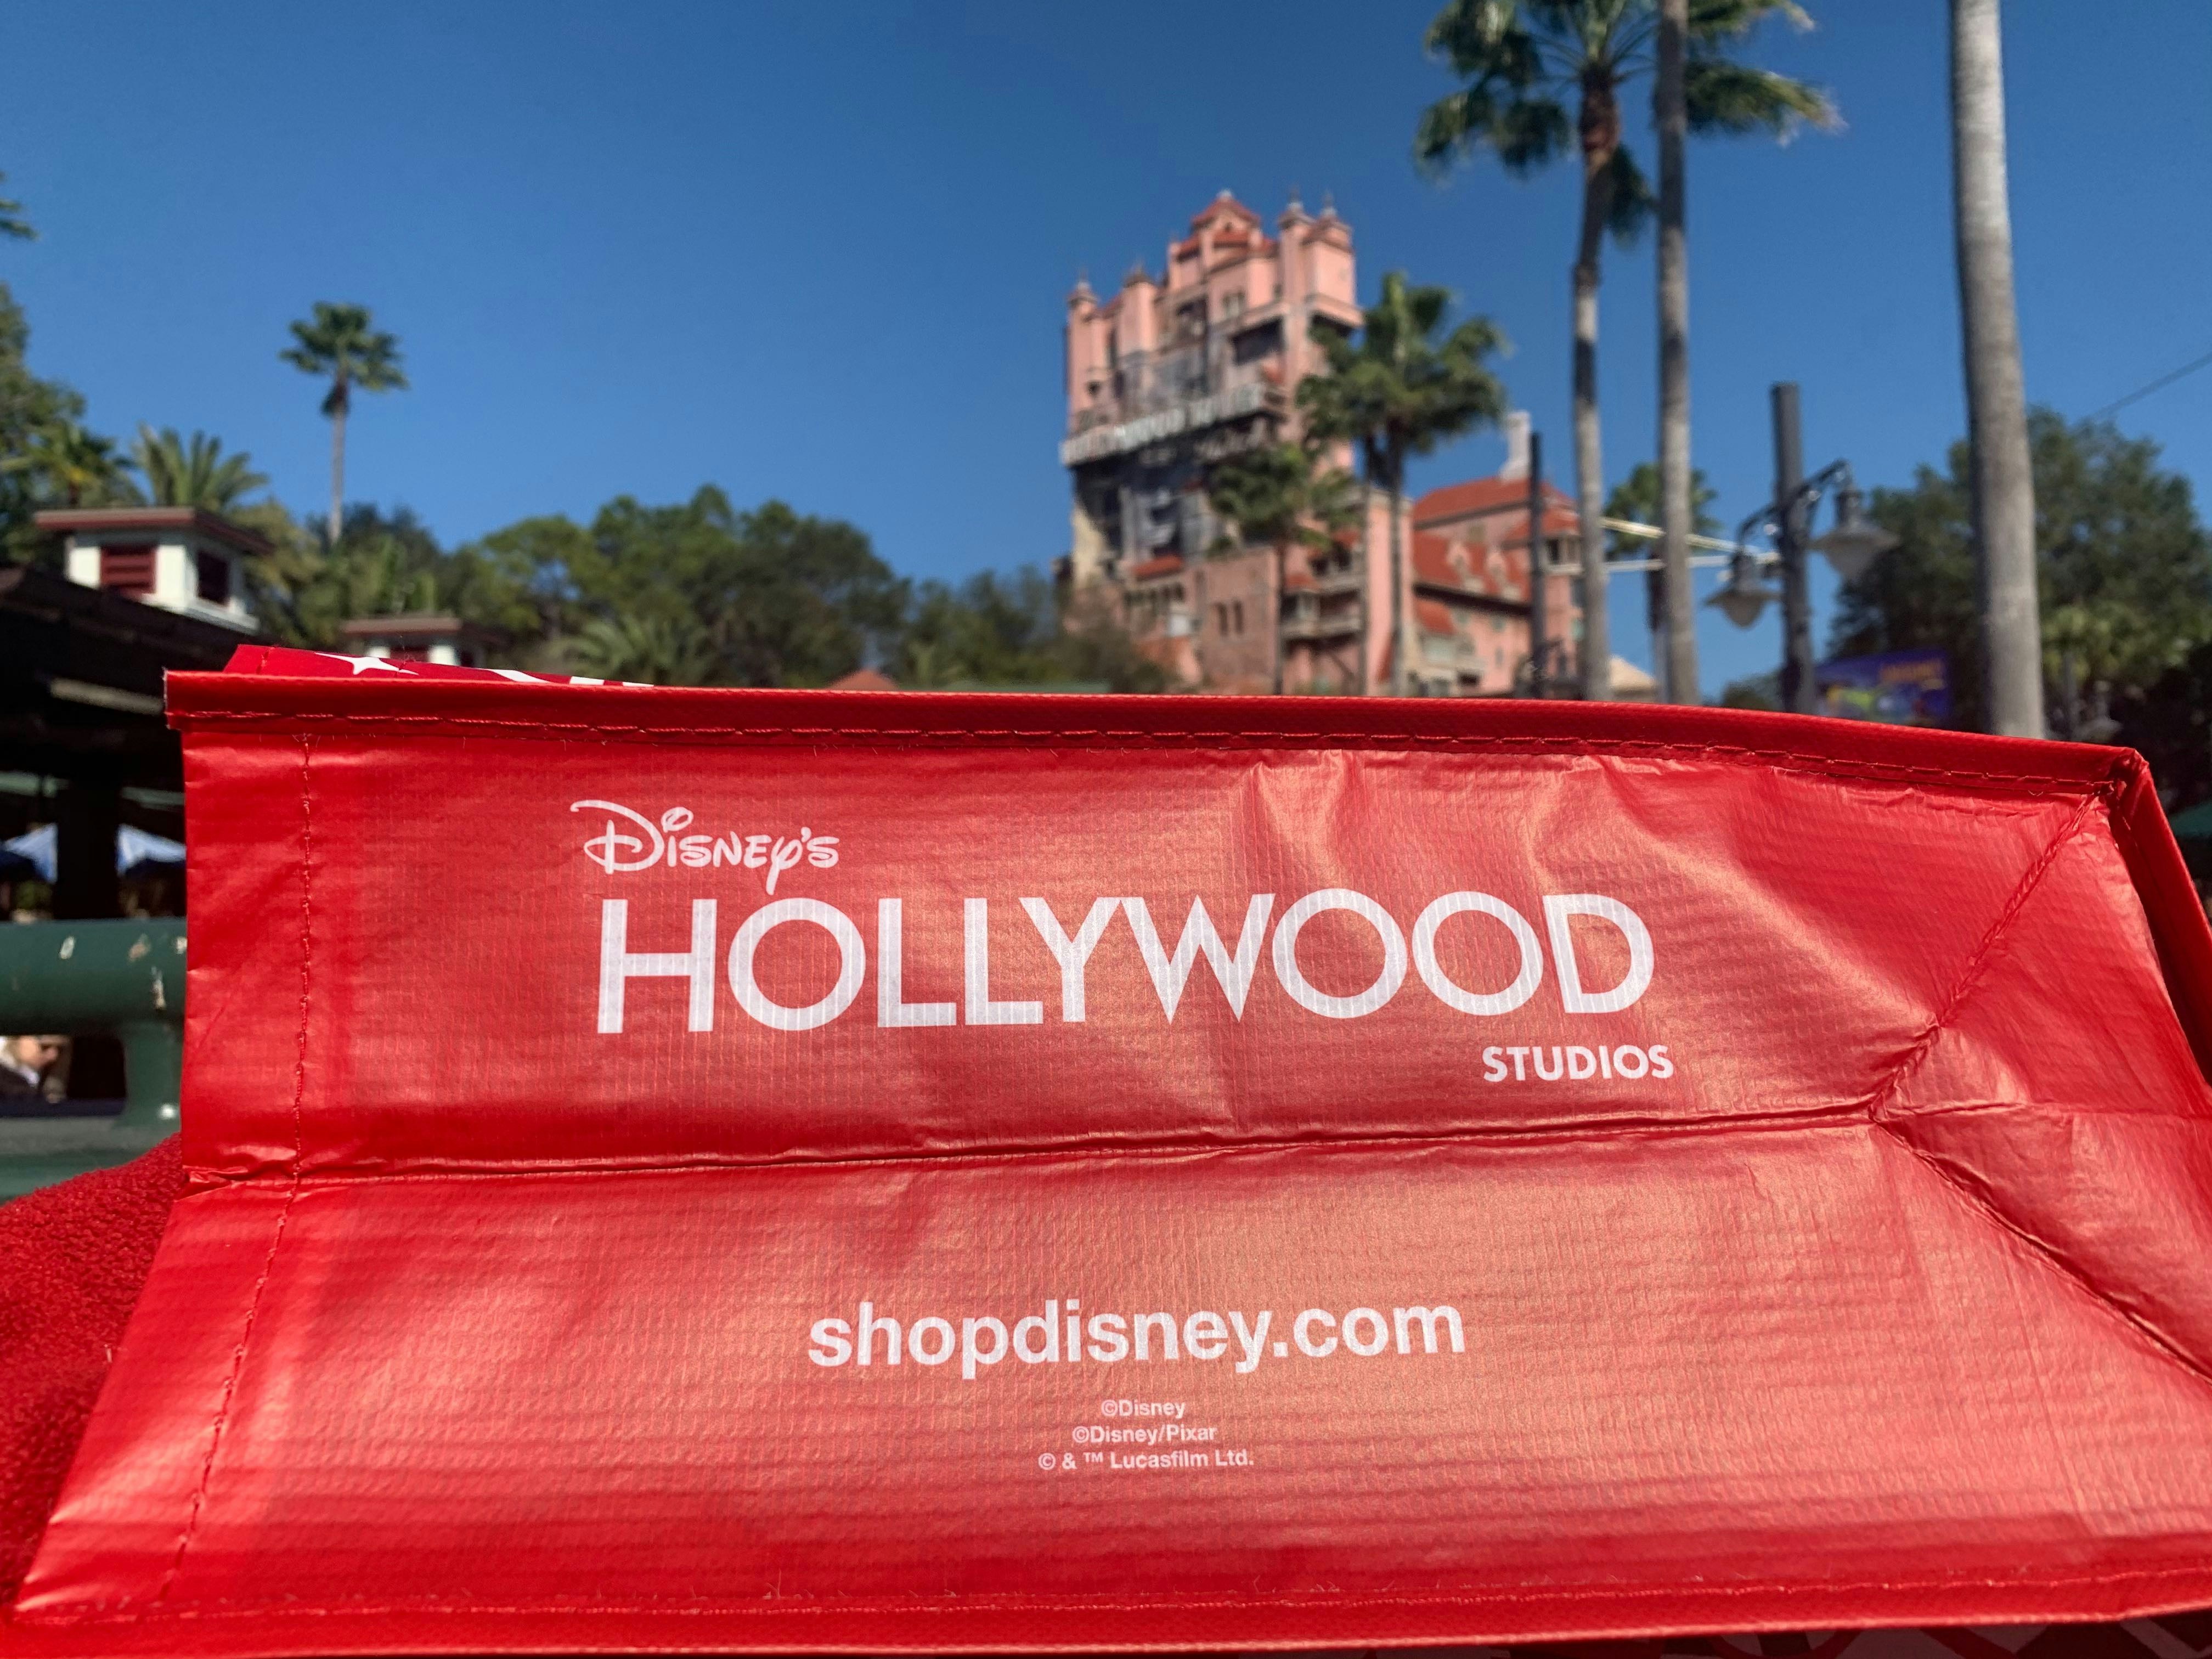 hollywood studios new reusable bags logo 2020 5.jpg?auto=compress%2Cformat&ixlib=php 1.2